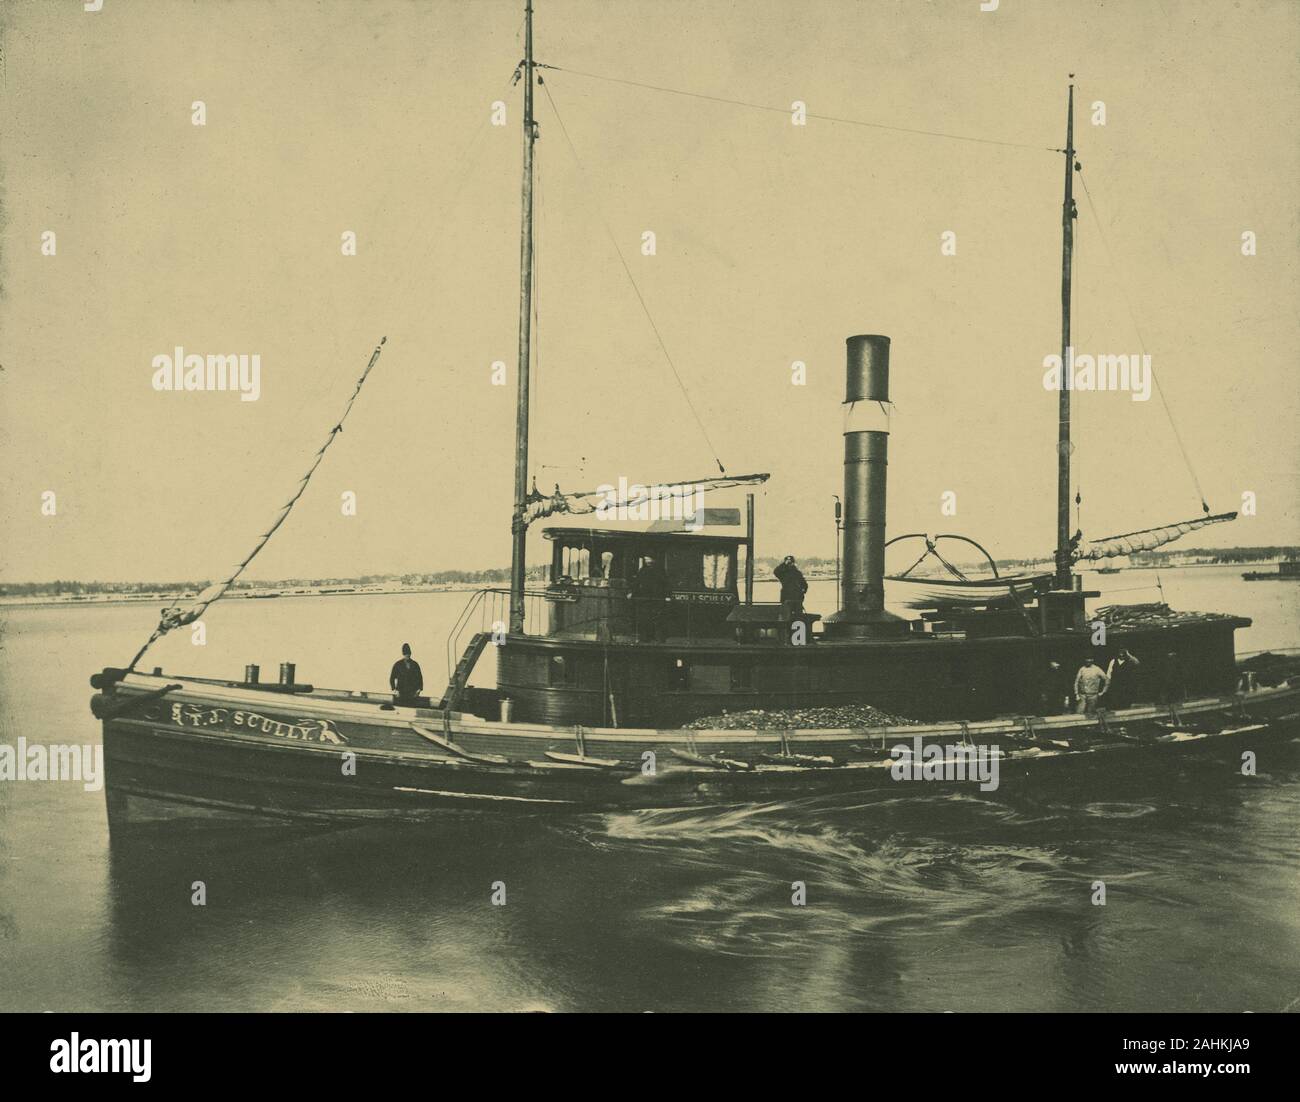 Antike c 1890 Foto, tugboat T.J. Scully am Raritan River in South Amboy in New Jersey. Quelle: ORIGINAL CYANOTYPIE FOTO Stockfoto